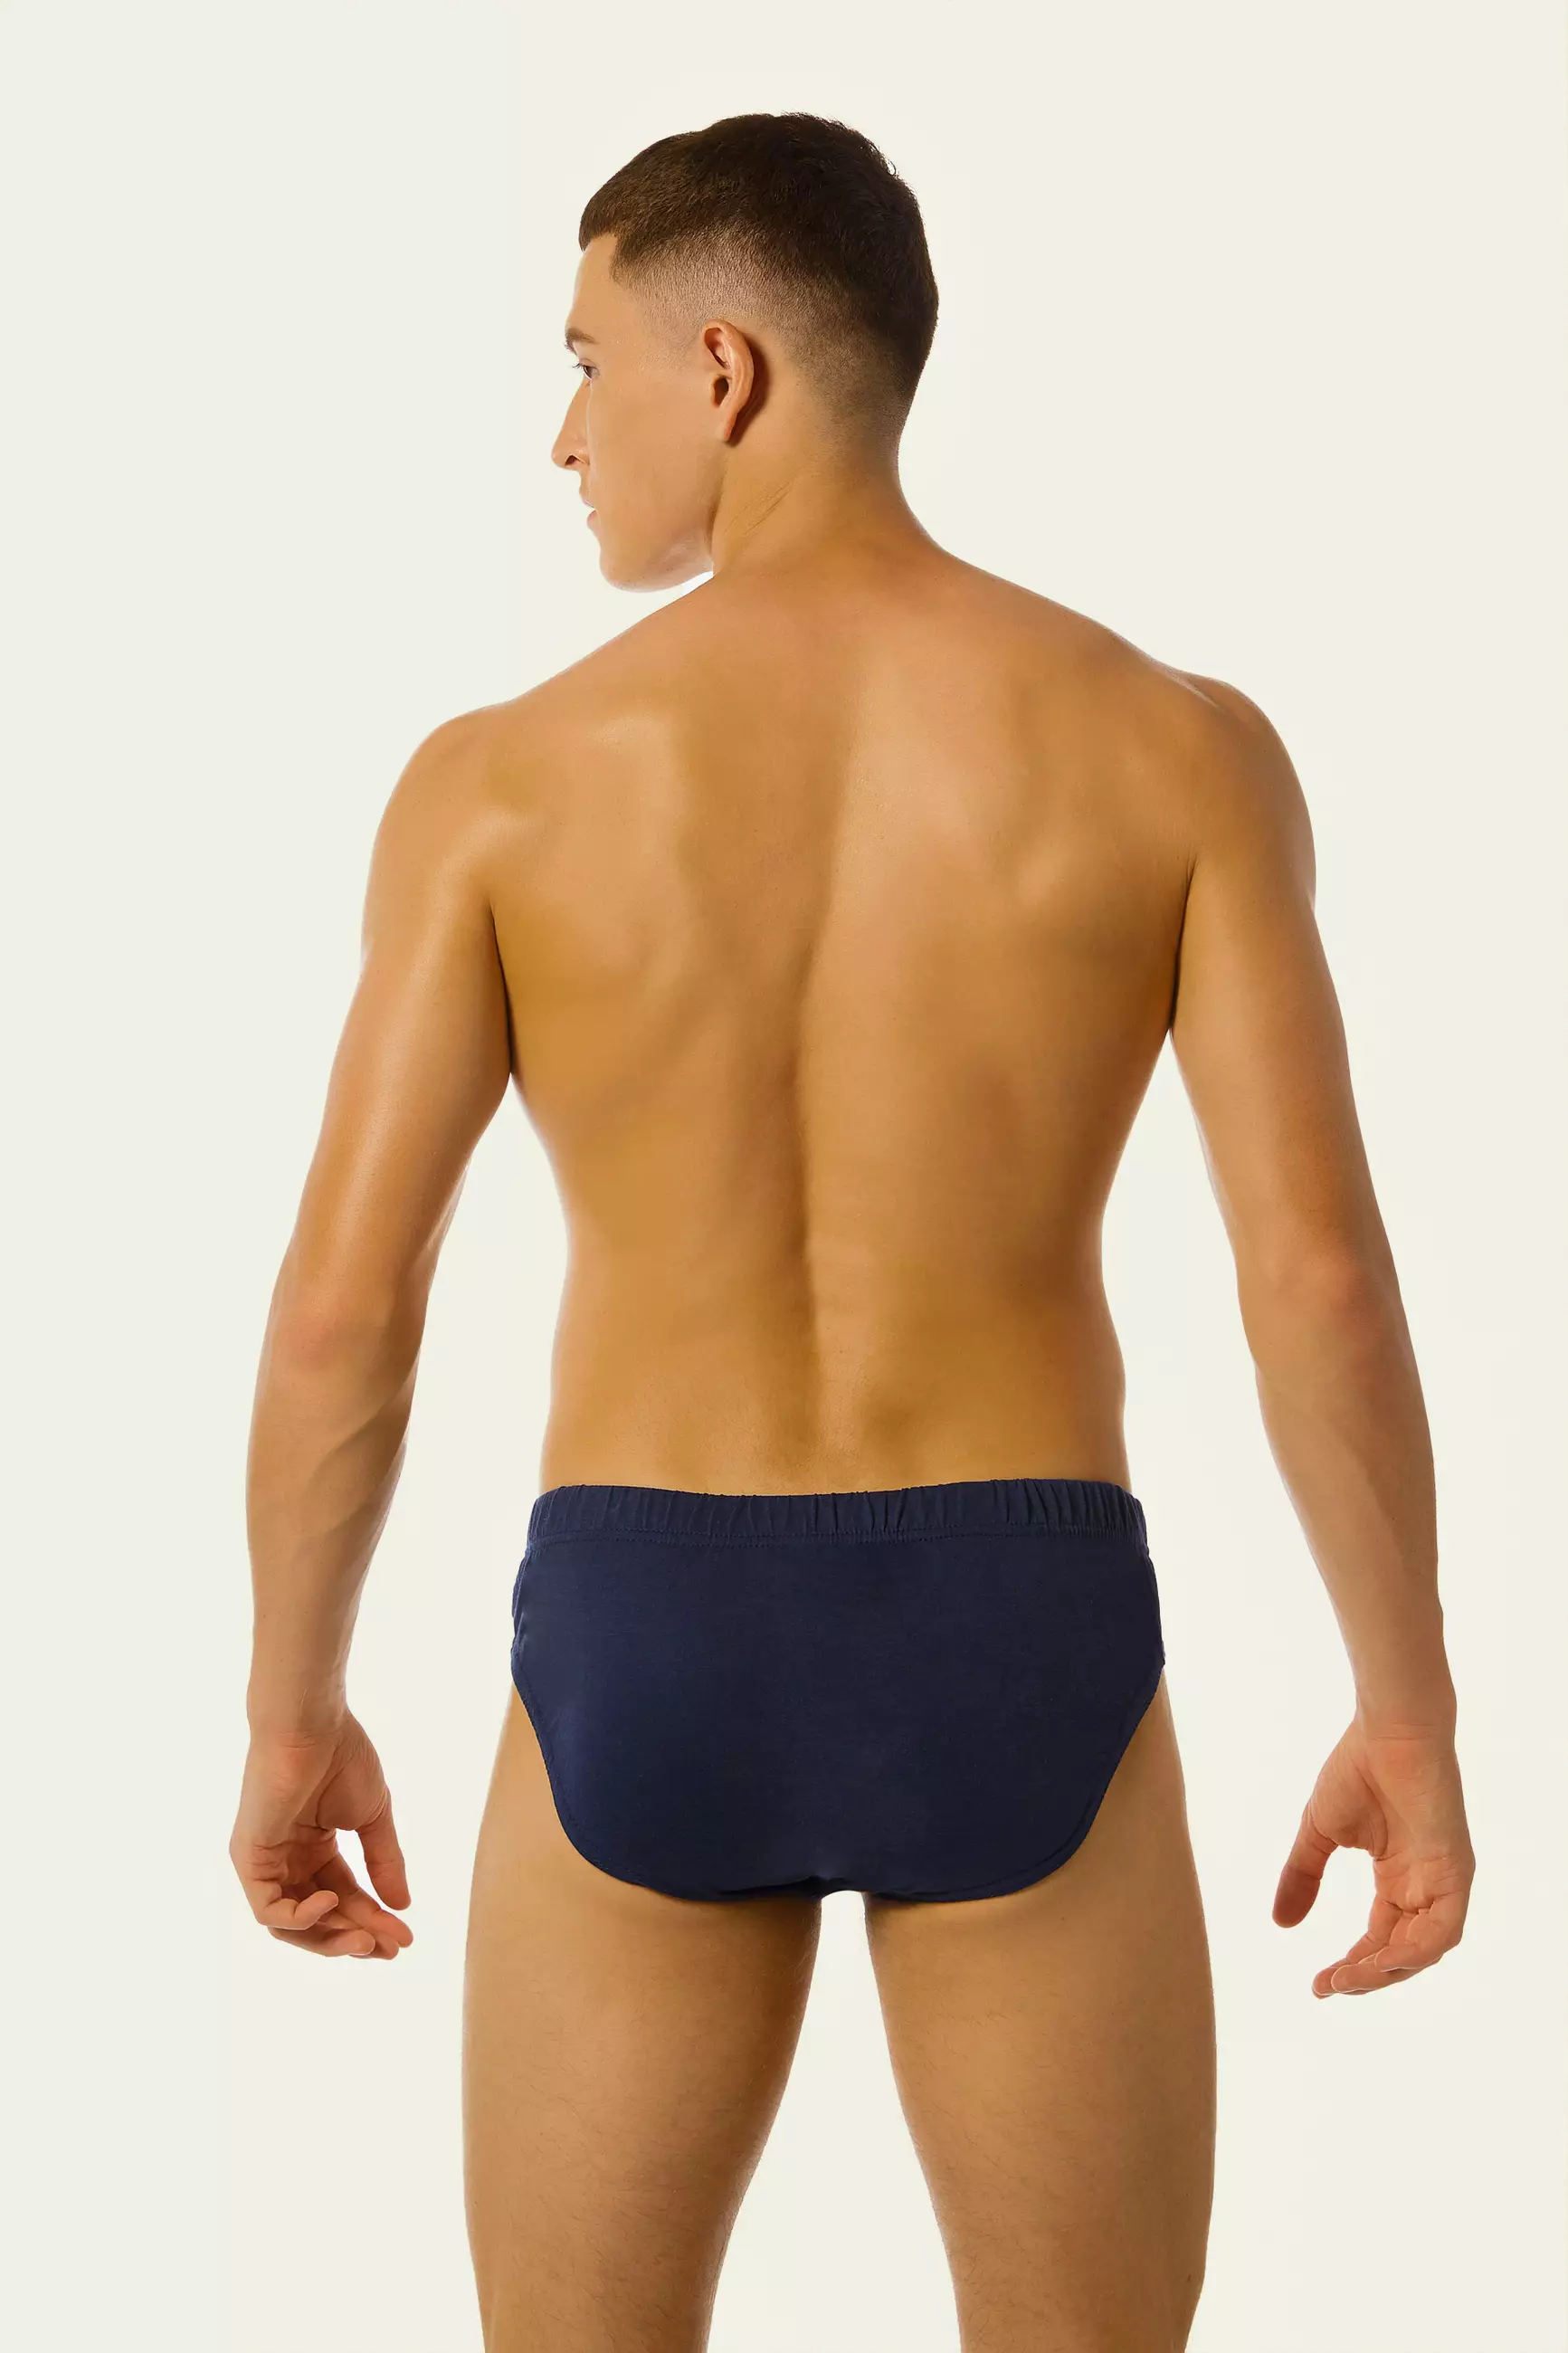 6pcs BENCH Boxer brief for men underwear cotton fashion.